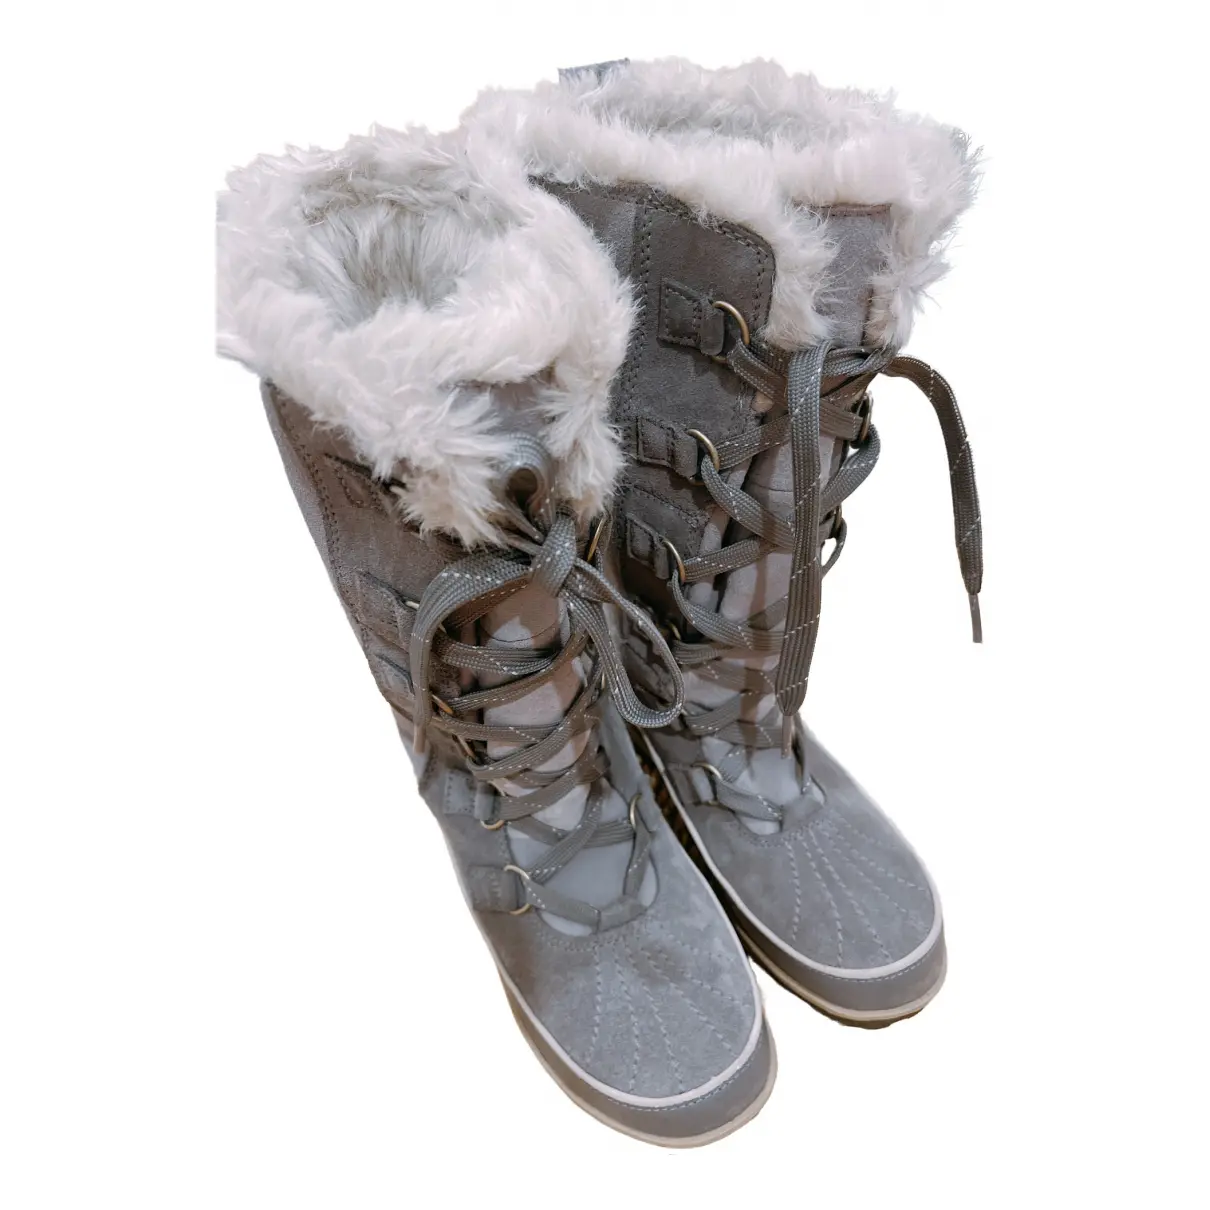 Snow boots Sorel